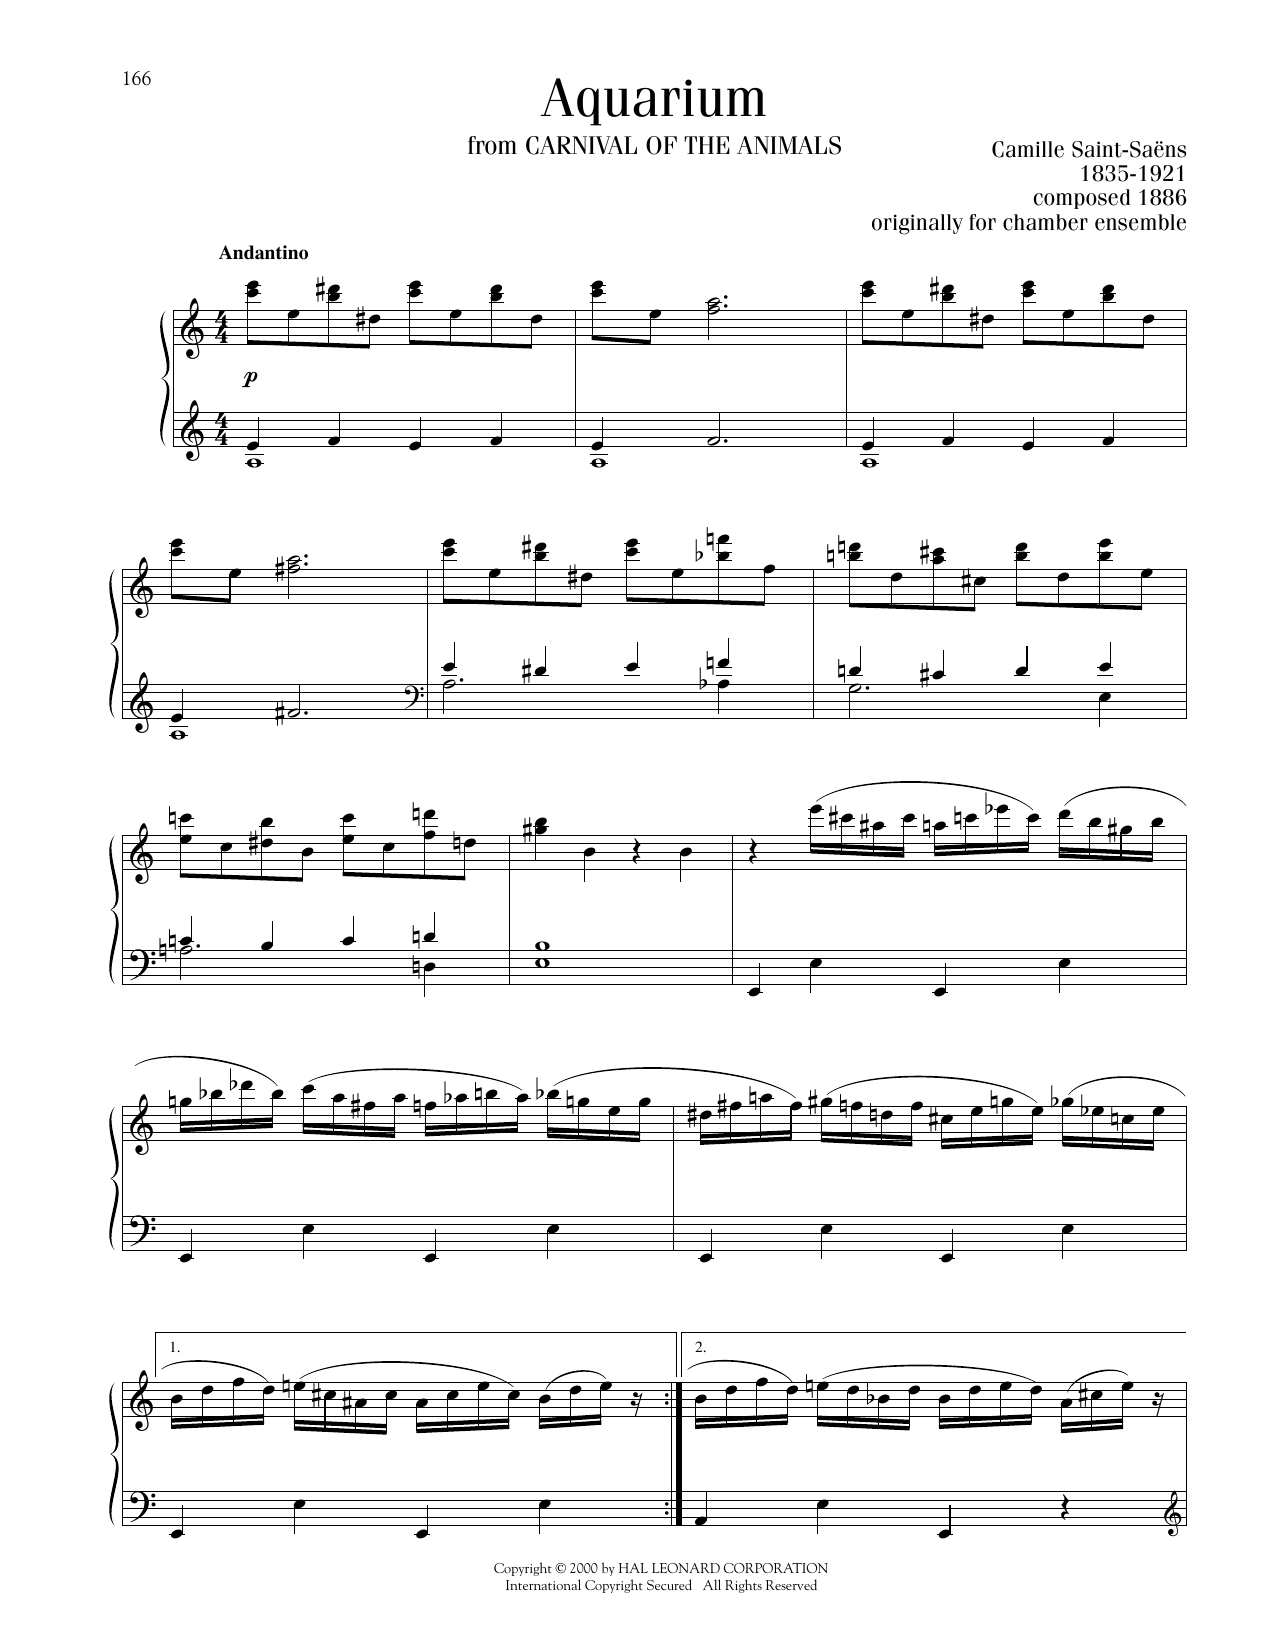 Camille Saint-Saens The Aquarium sheet music notes printable PDF score